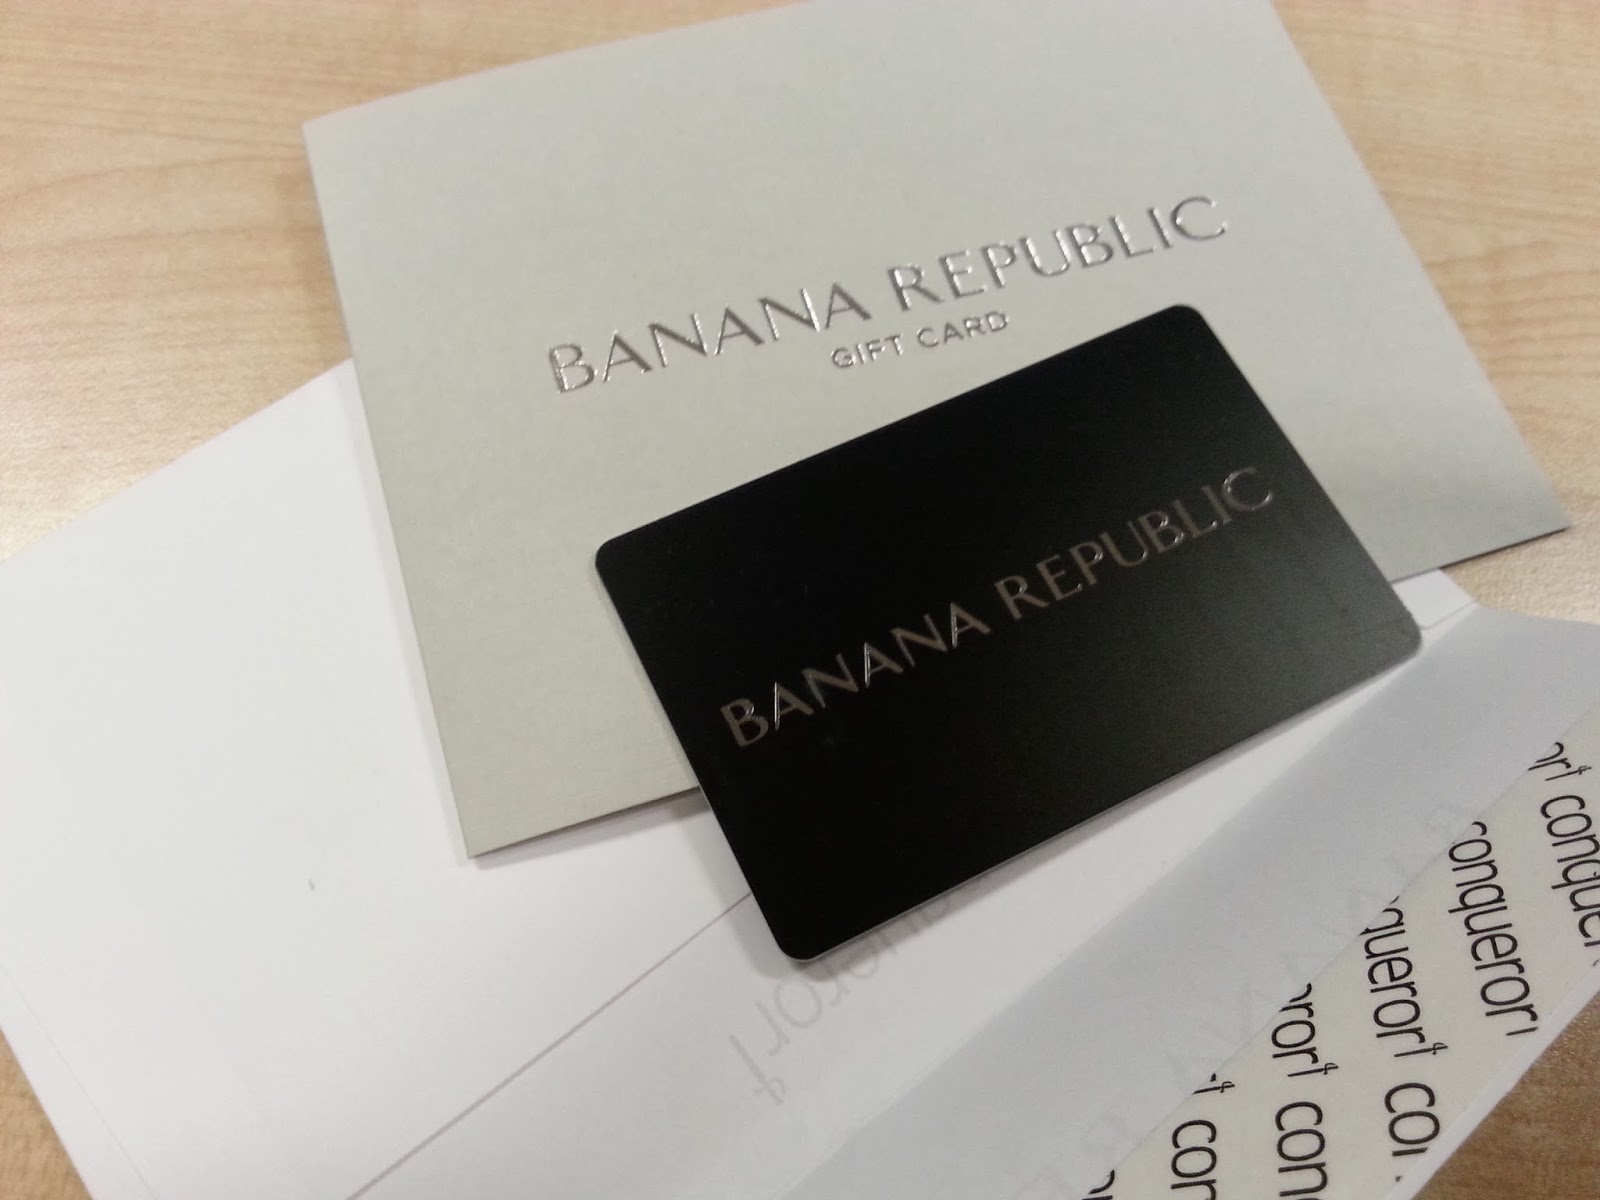 banana republic gift card